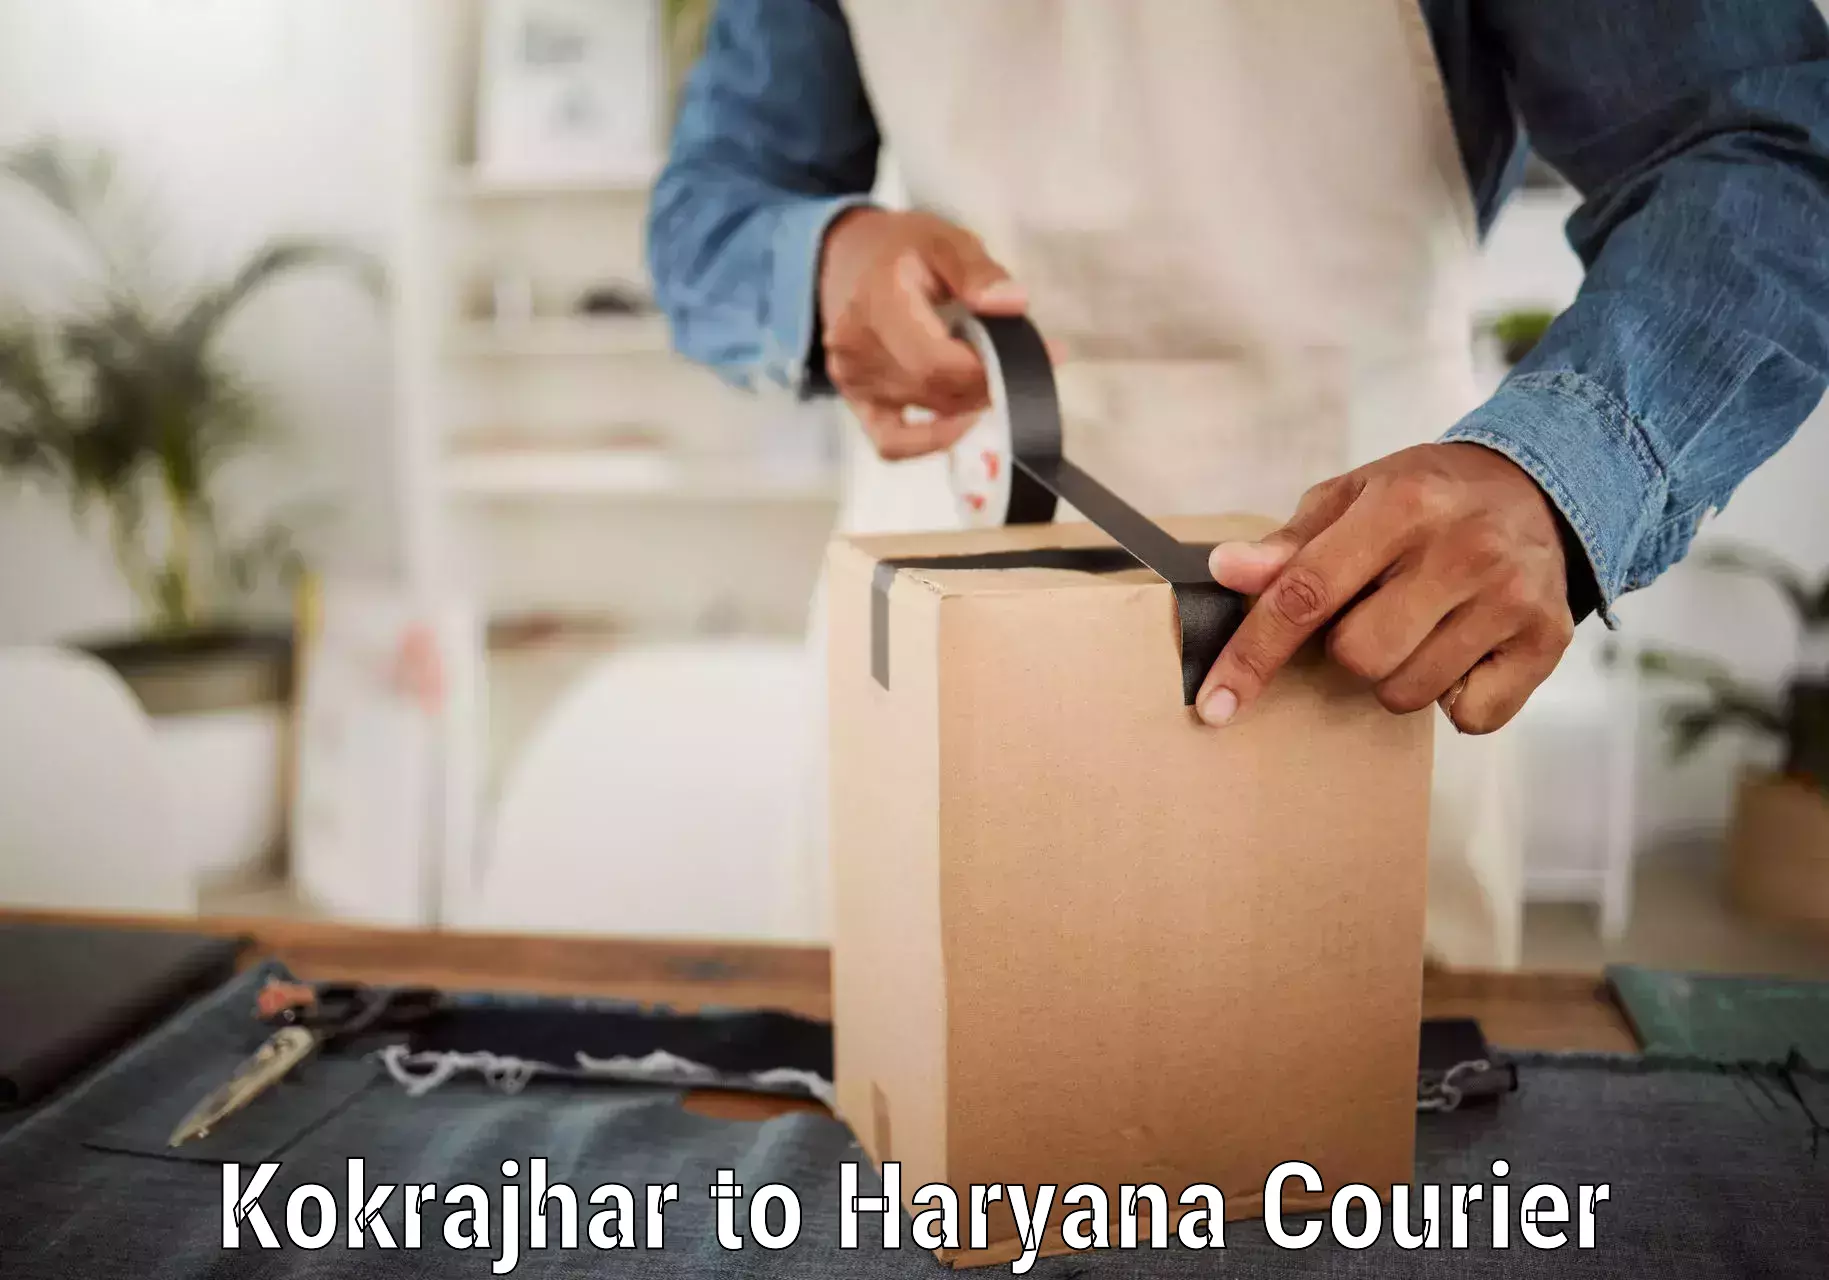 Urgent courier needs Kokrajhar to Sonipat